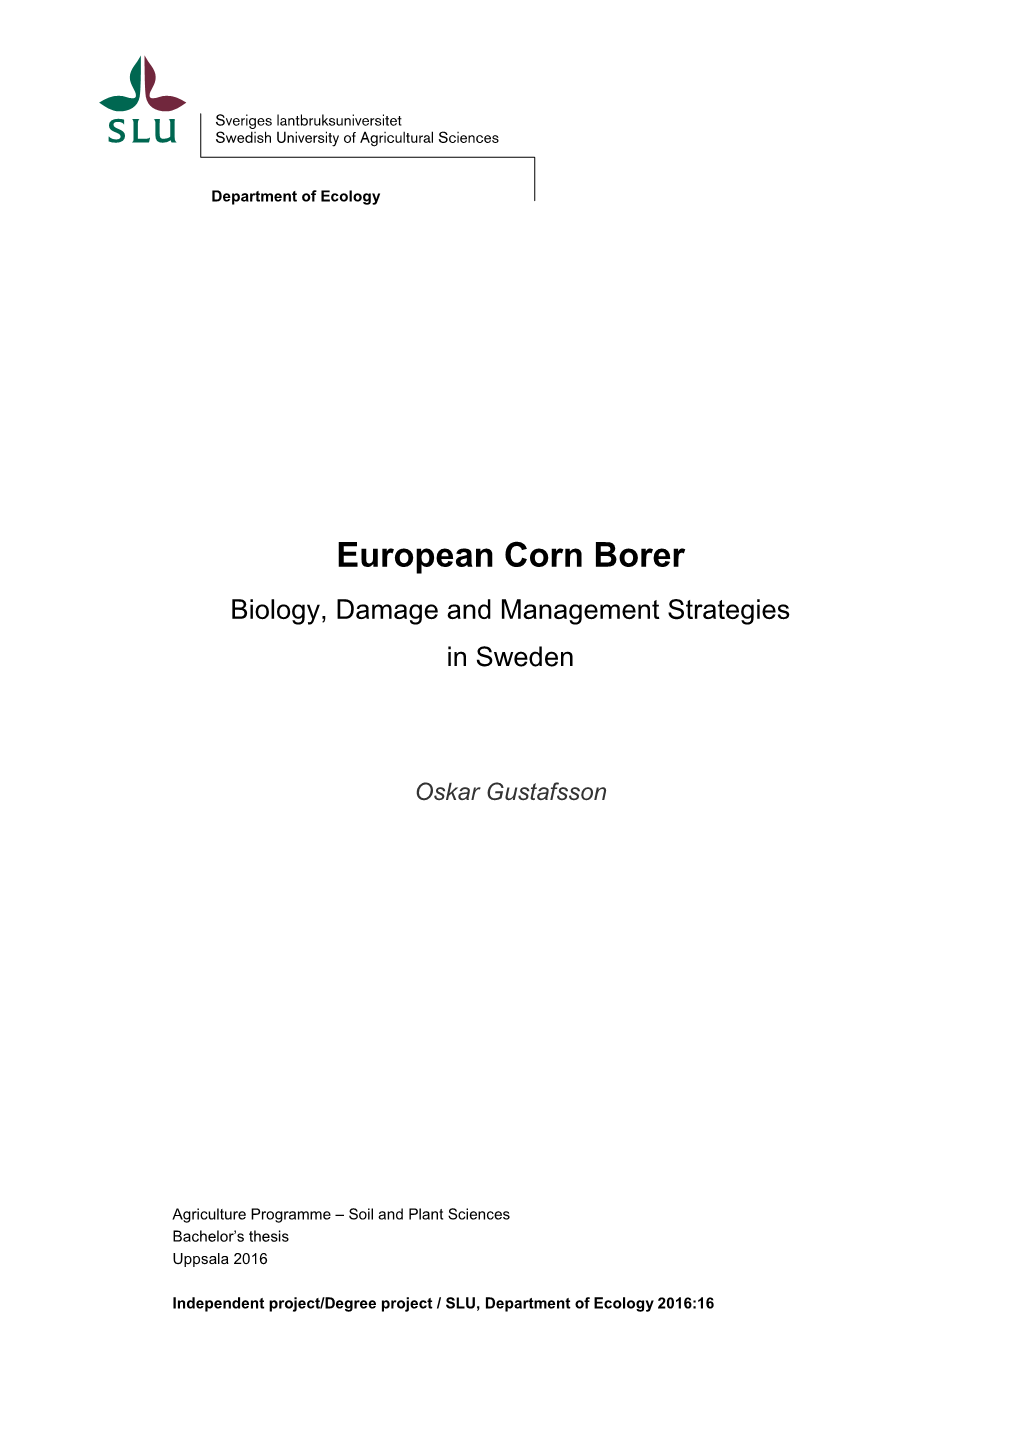 European Corn Borer Biology, Damage and Management Strategies in Sweden